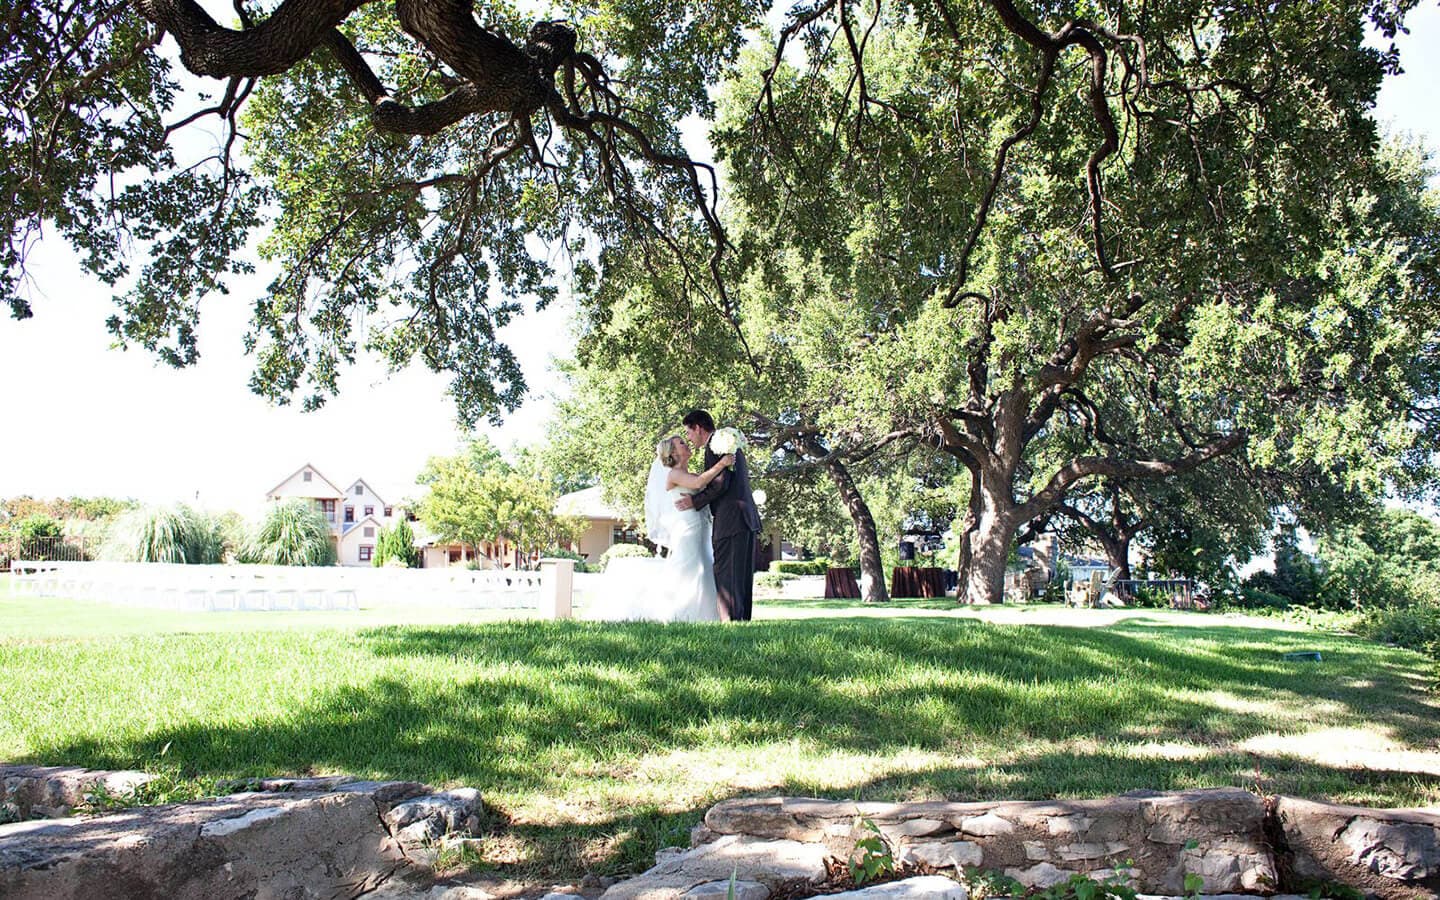 Texas waterfront wedding venues - Texas wedding celebration